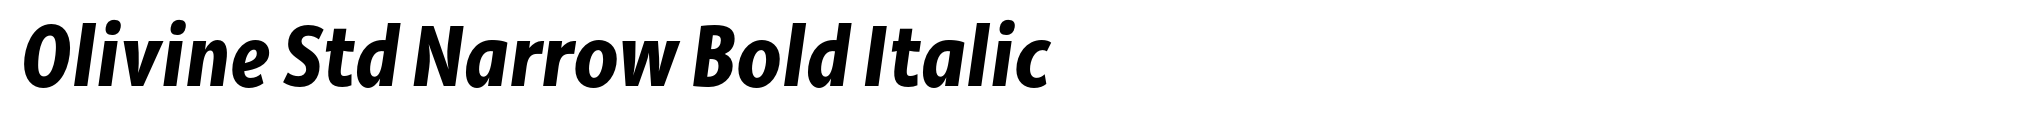 Olivine Std Narrow Bold Italic image